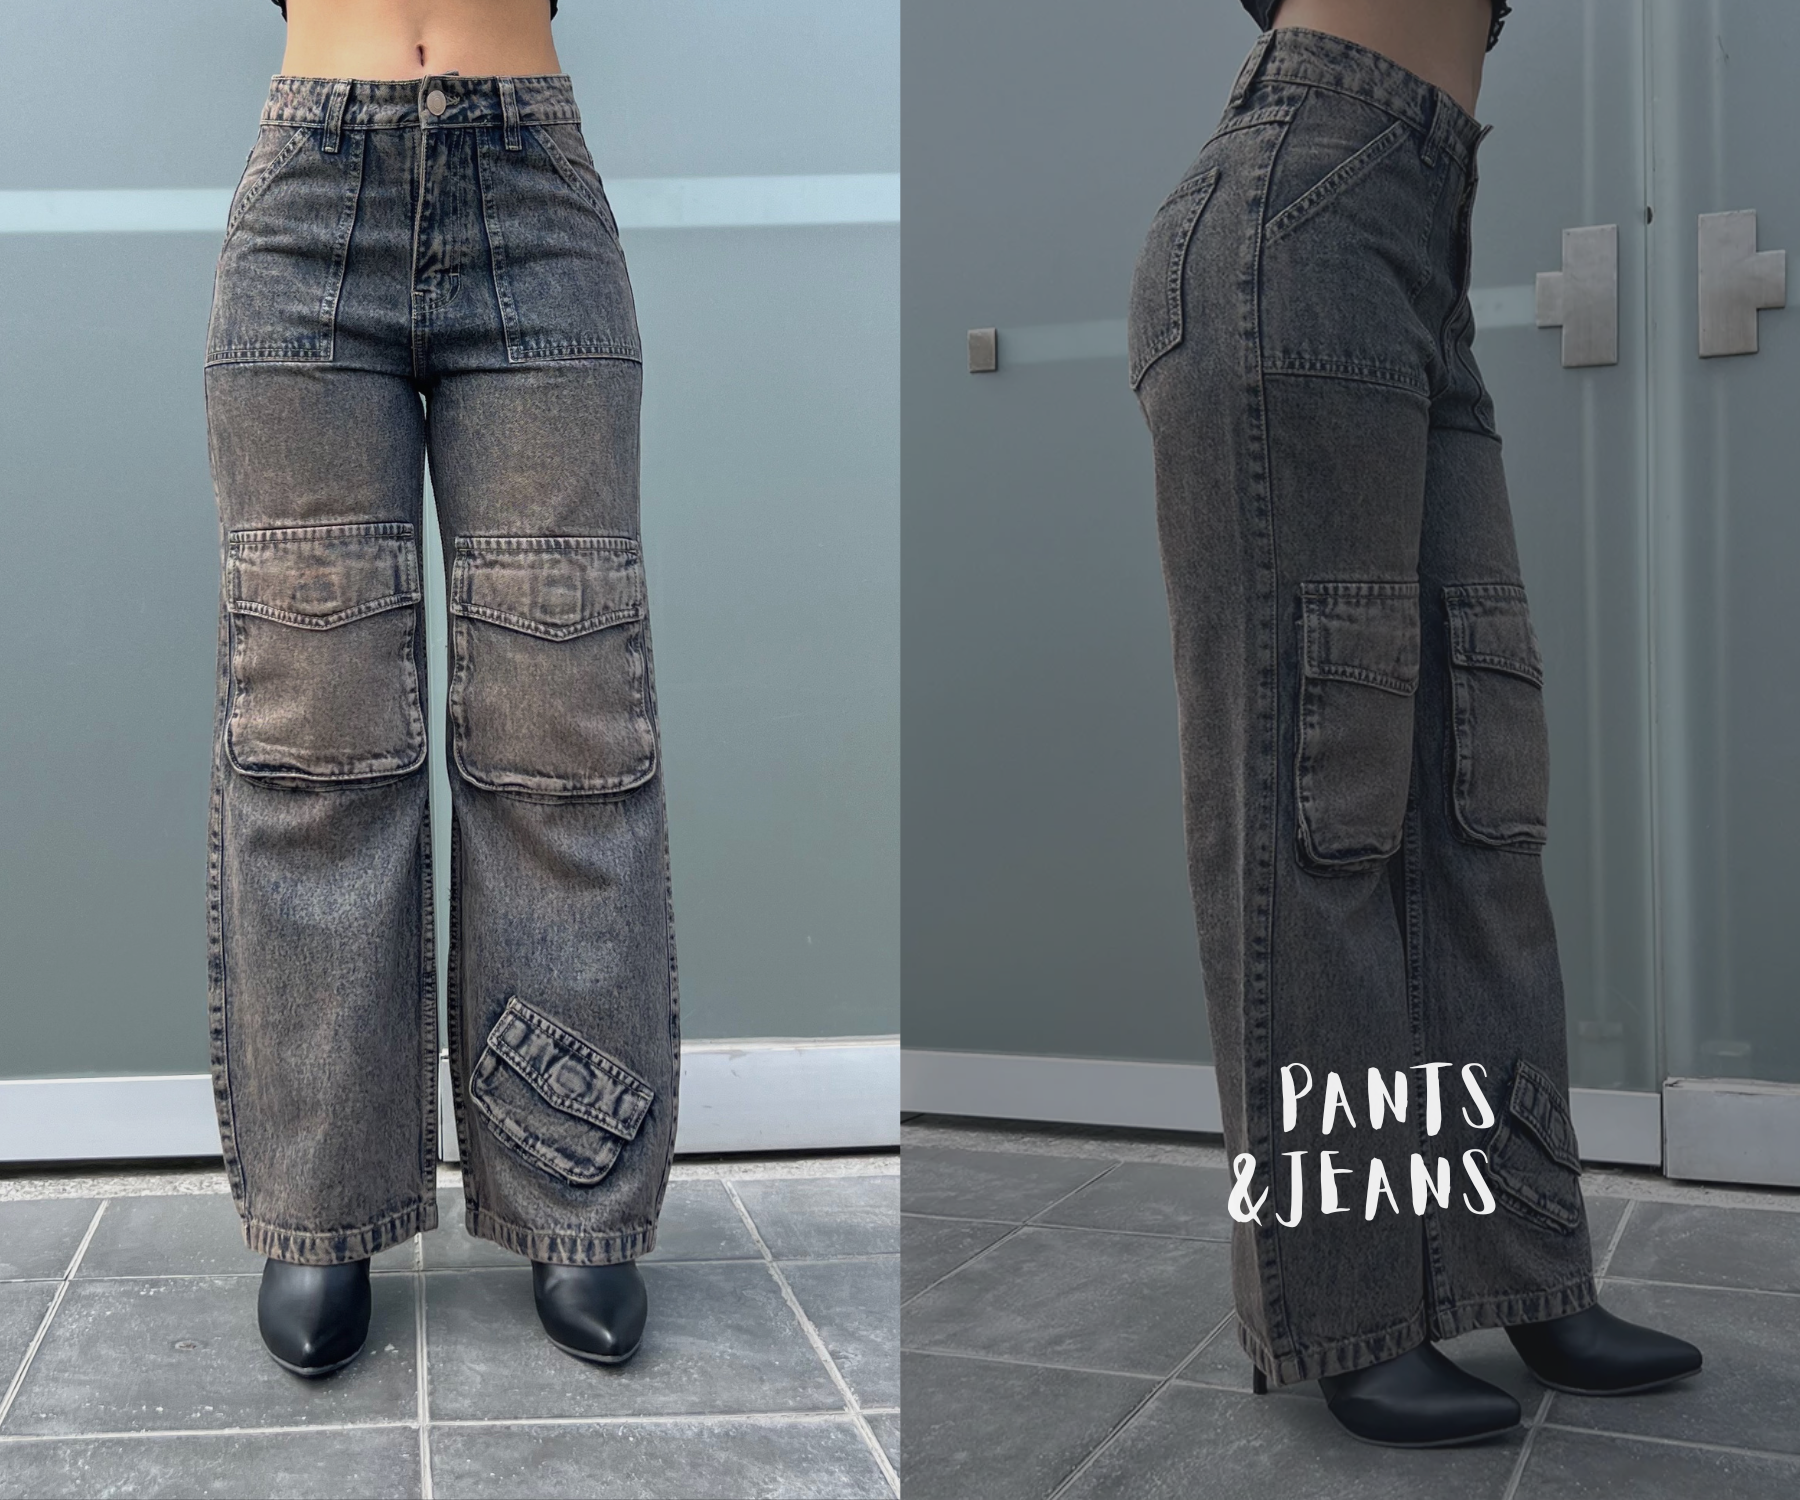 Pantalones & Jeans